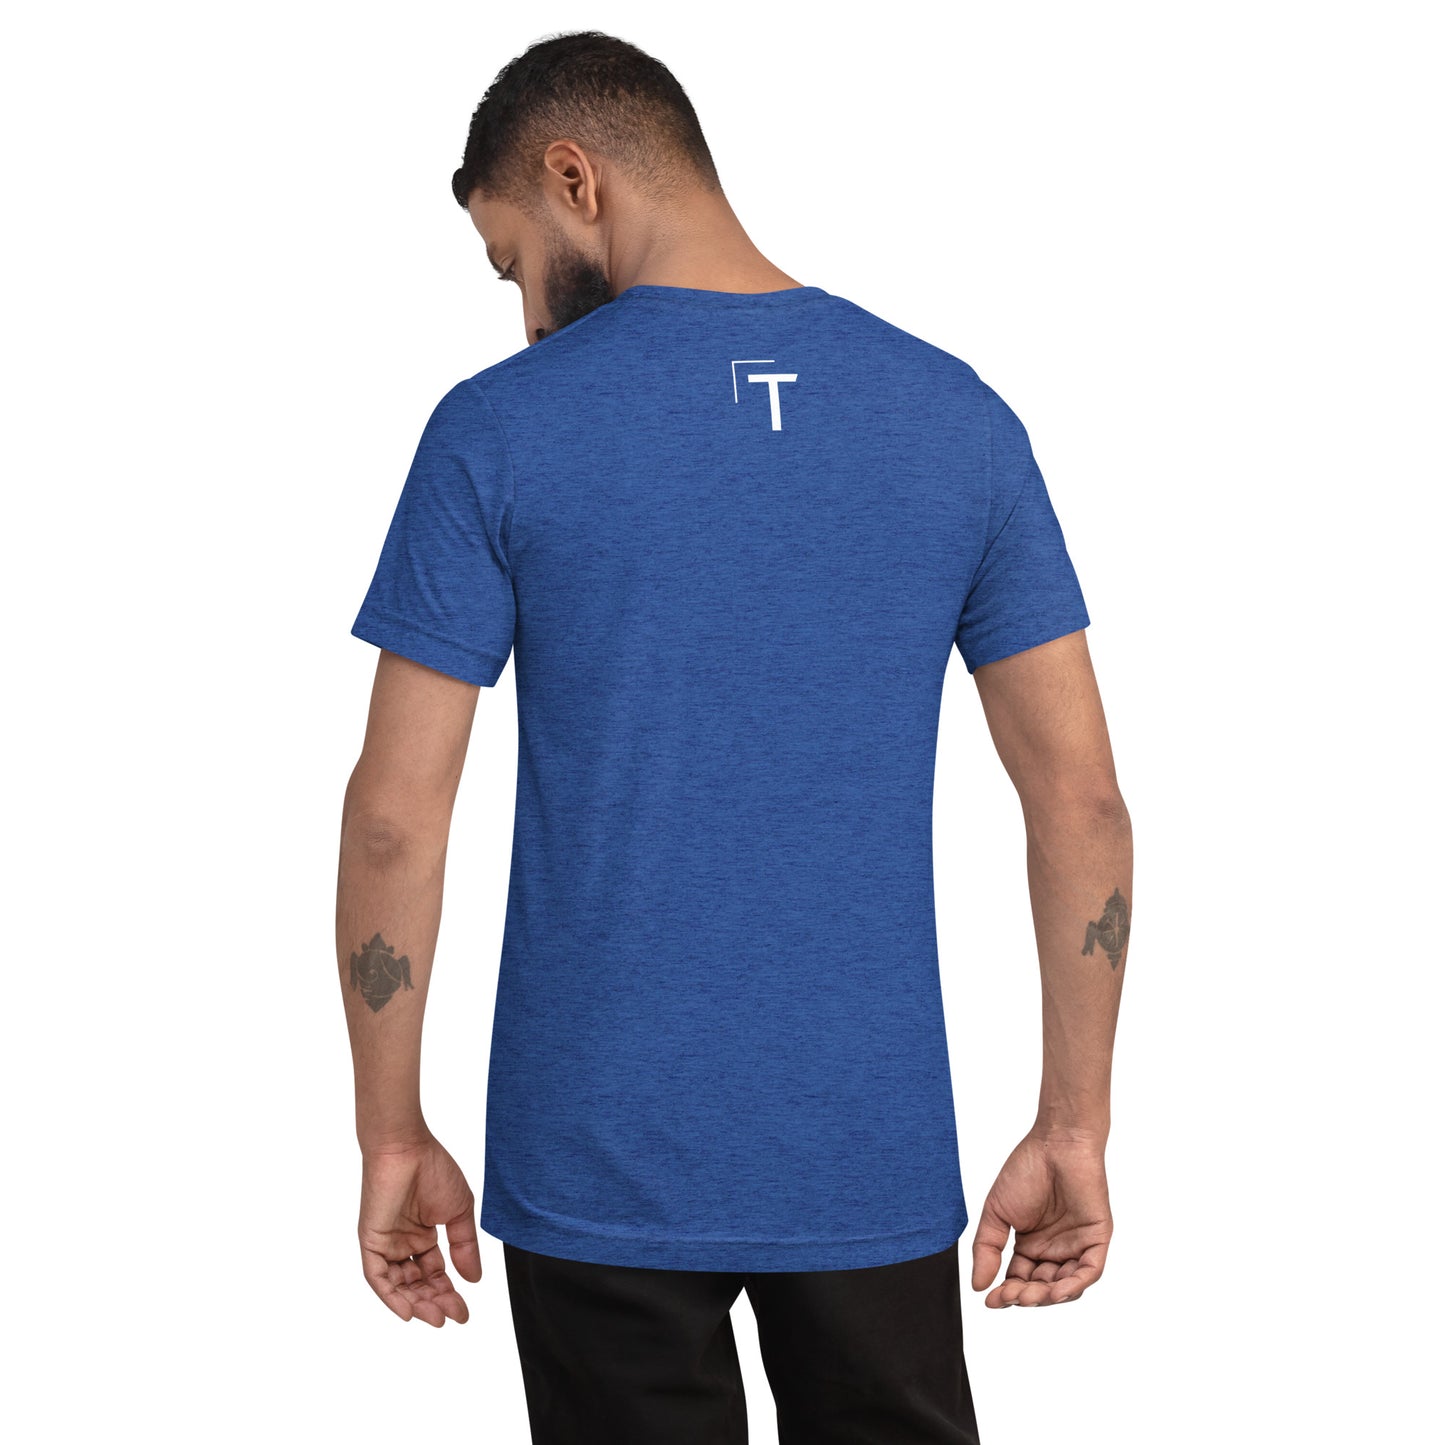 Taylor Blue T-shirt